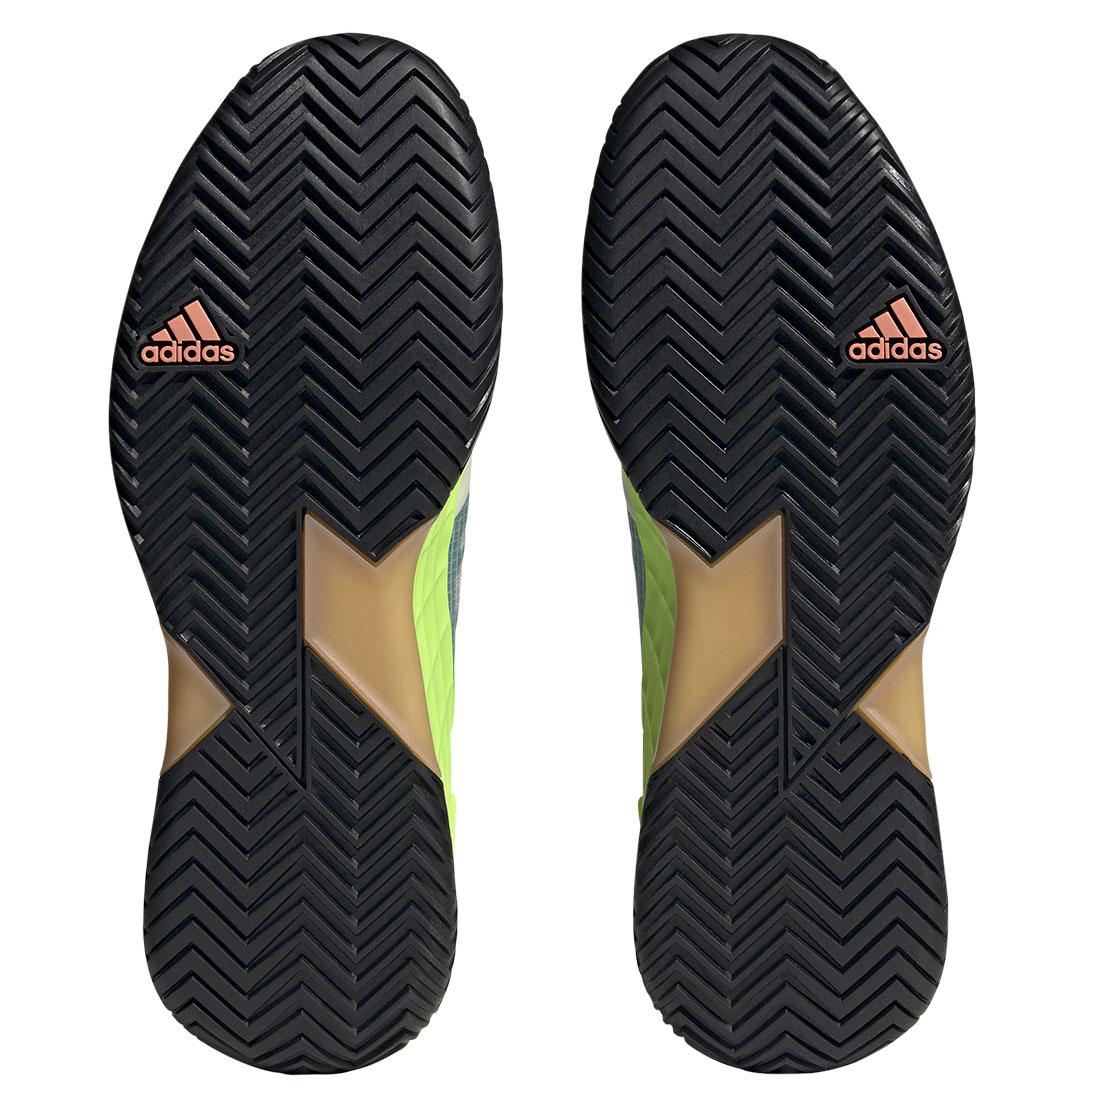 adidas Men`s Adizero Ubersonic 4.1 Tennis Shoes White and Carbon